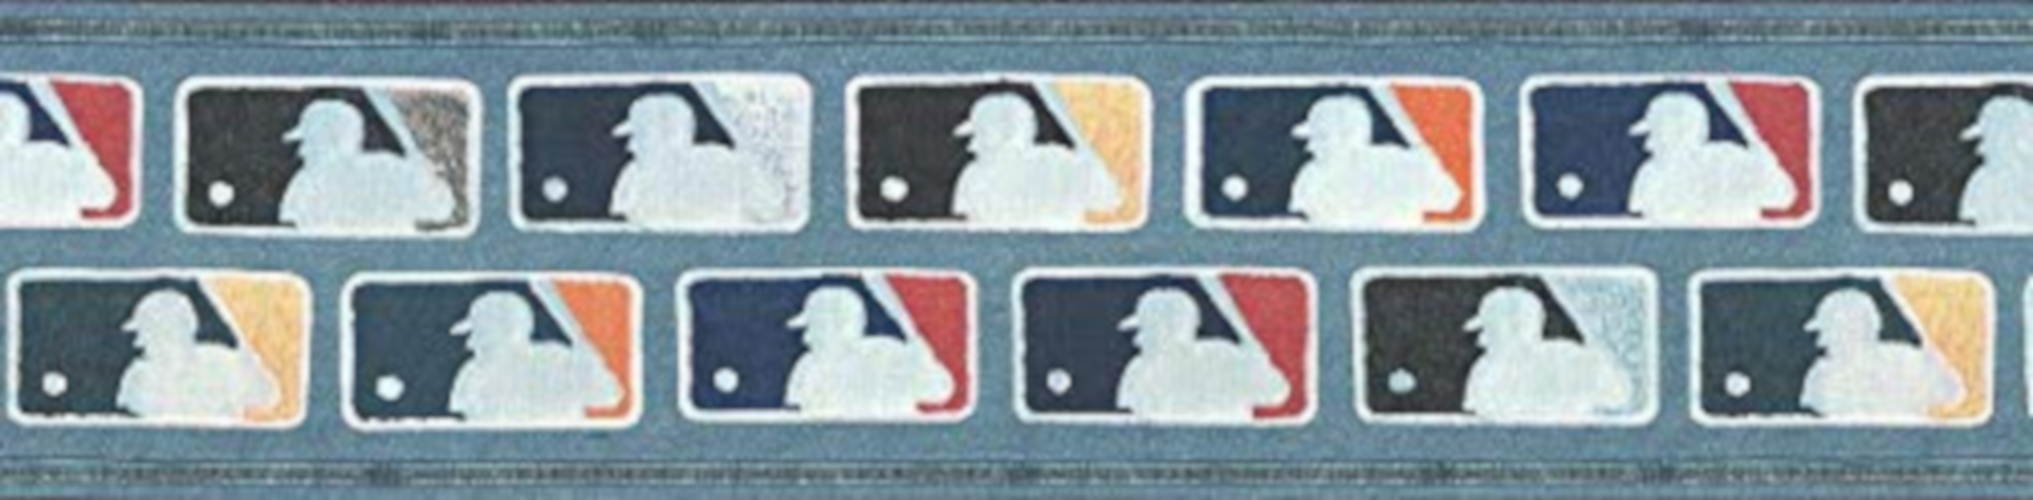 MLB Major Leage Baseball Wallpaper Border 05805010 Village